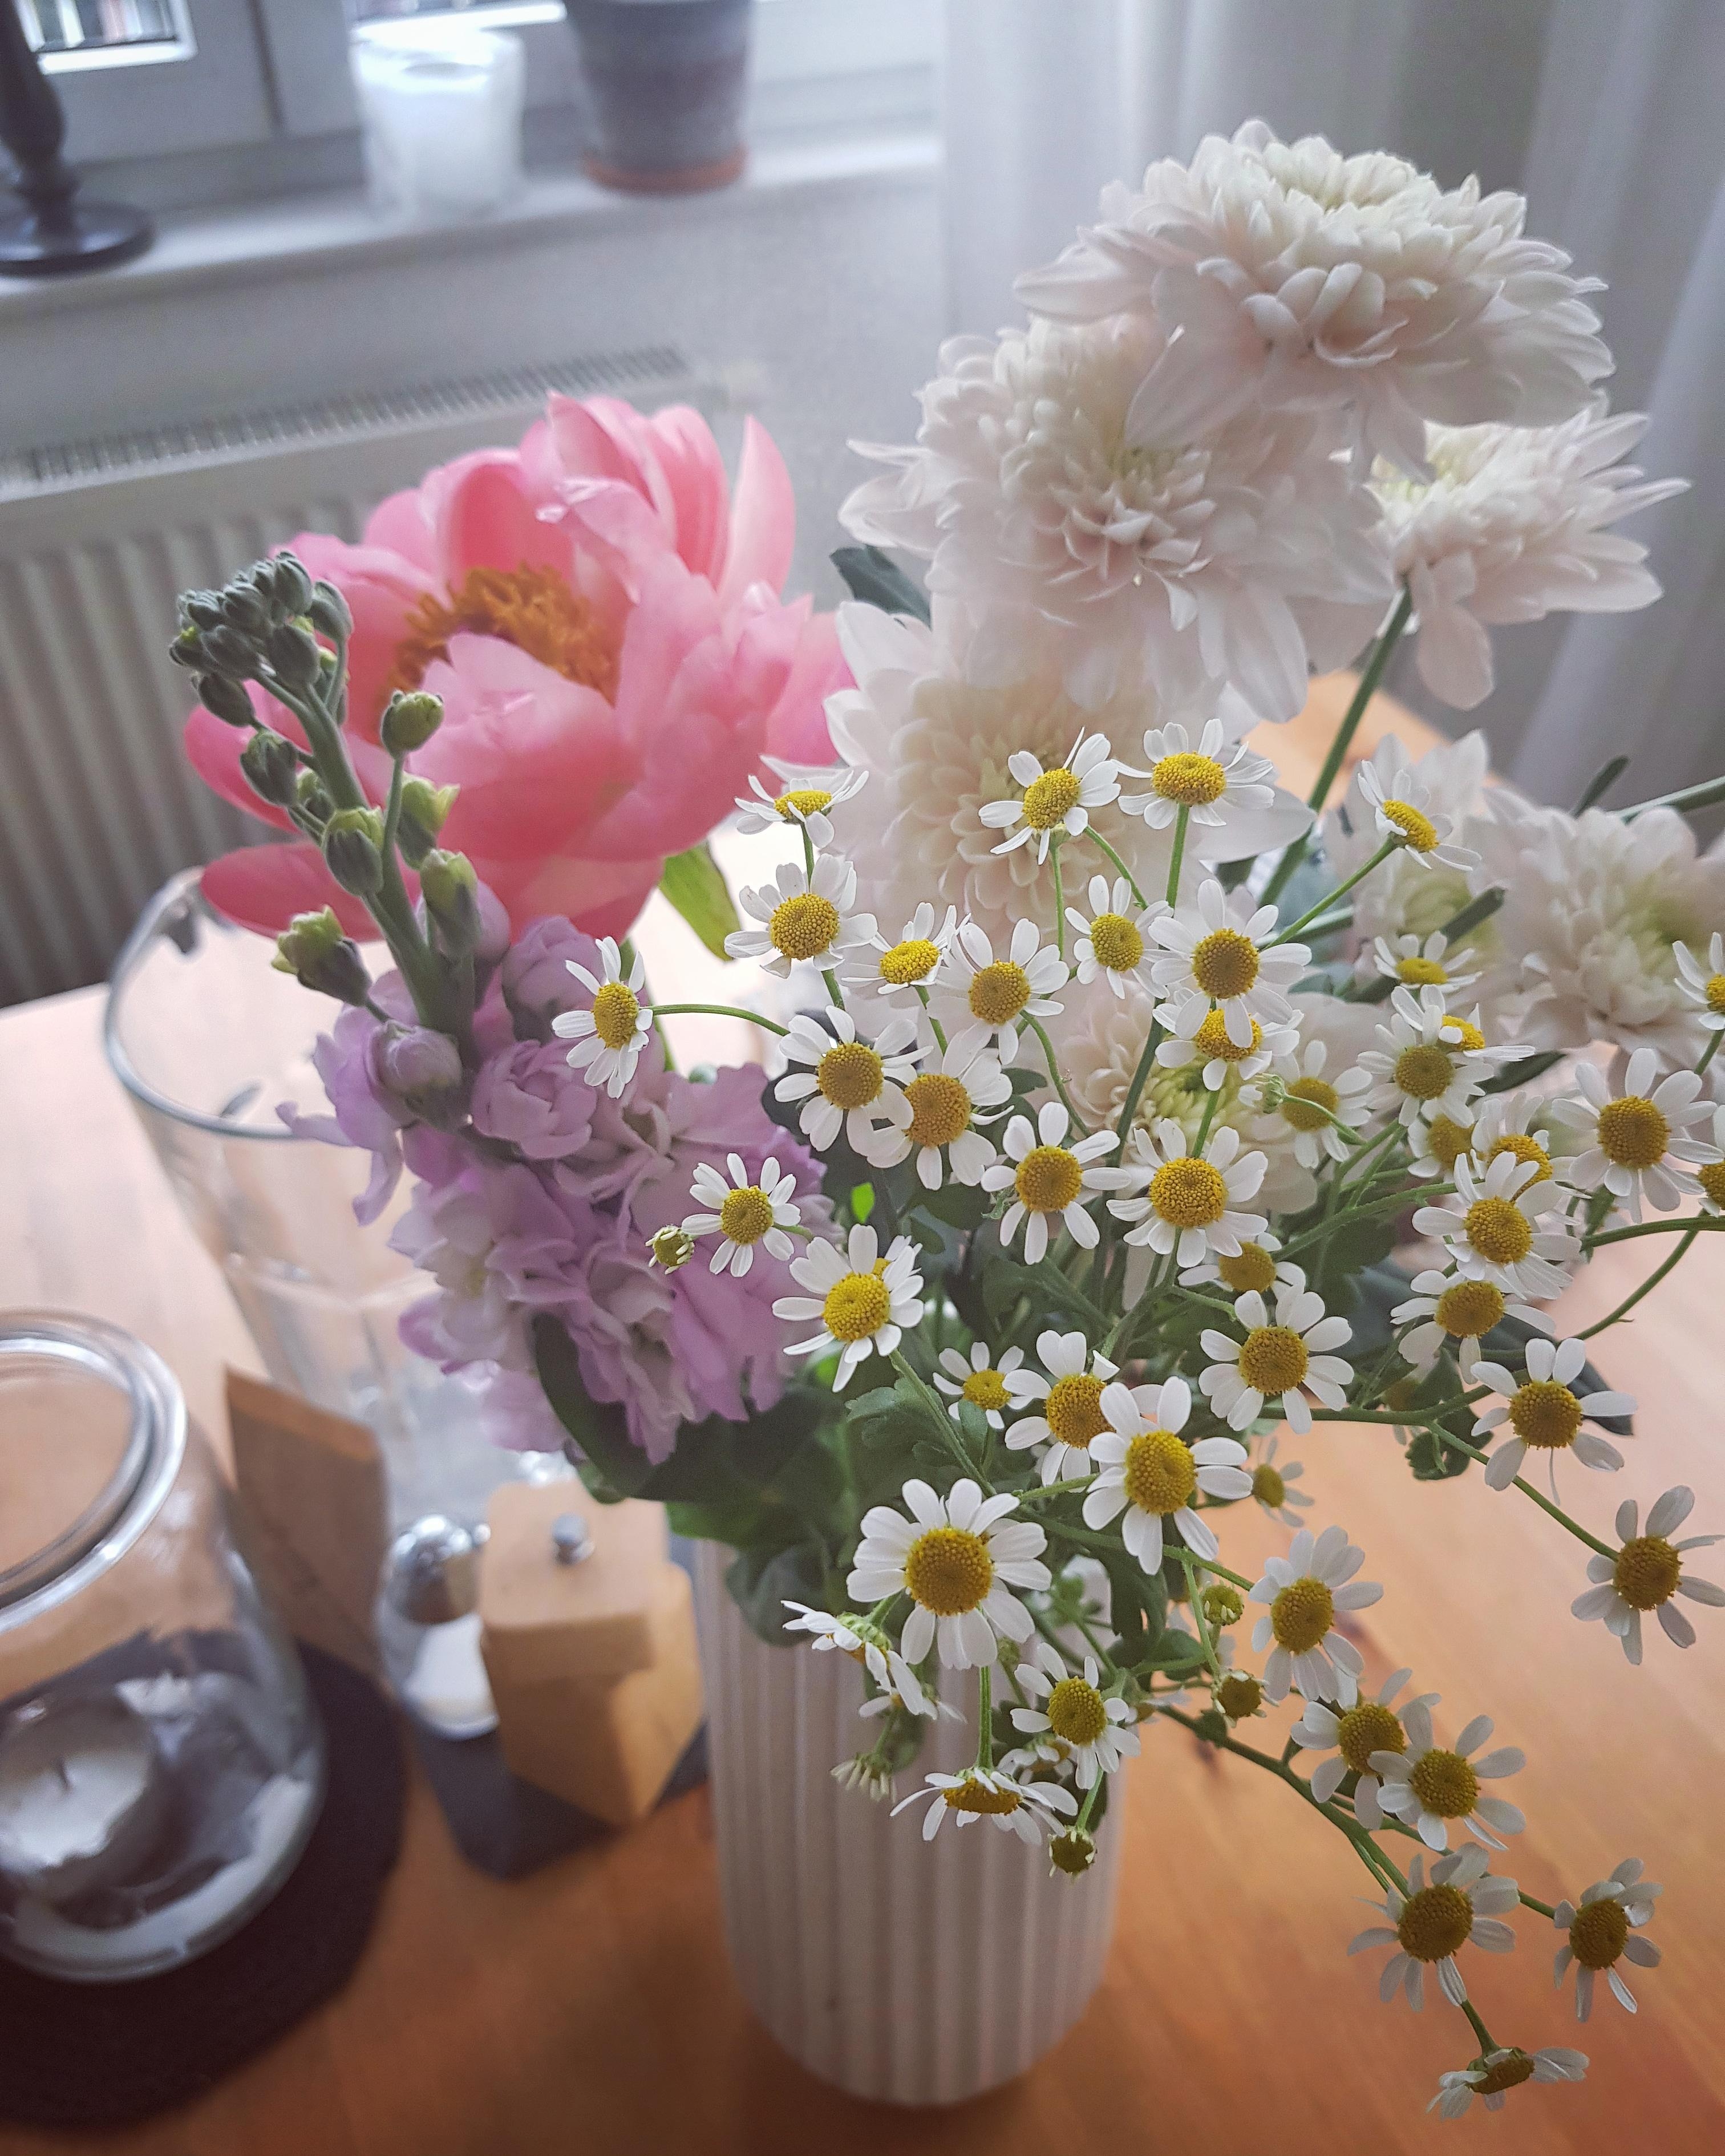 It was a very tough week... daher Kamille, Pfingstrose, Chrysantheme & Levkoje zum Freitag
#freshflowerfriday #grateful